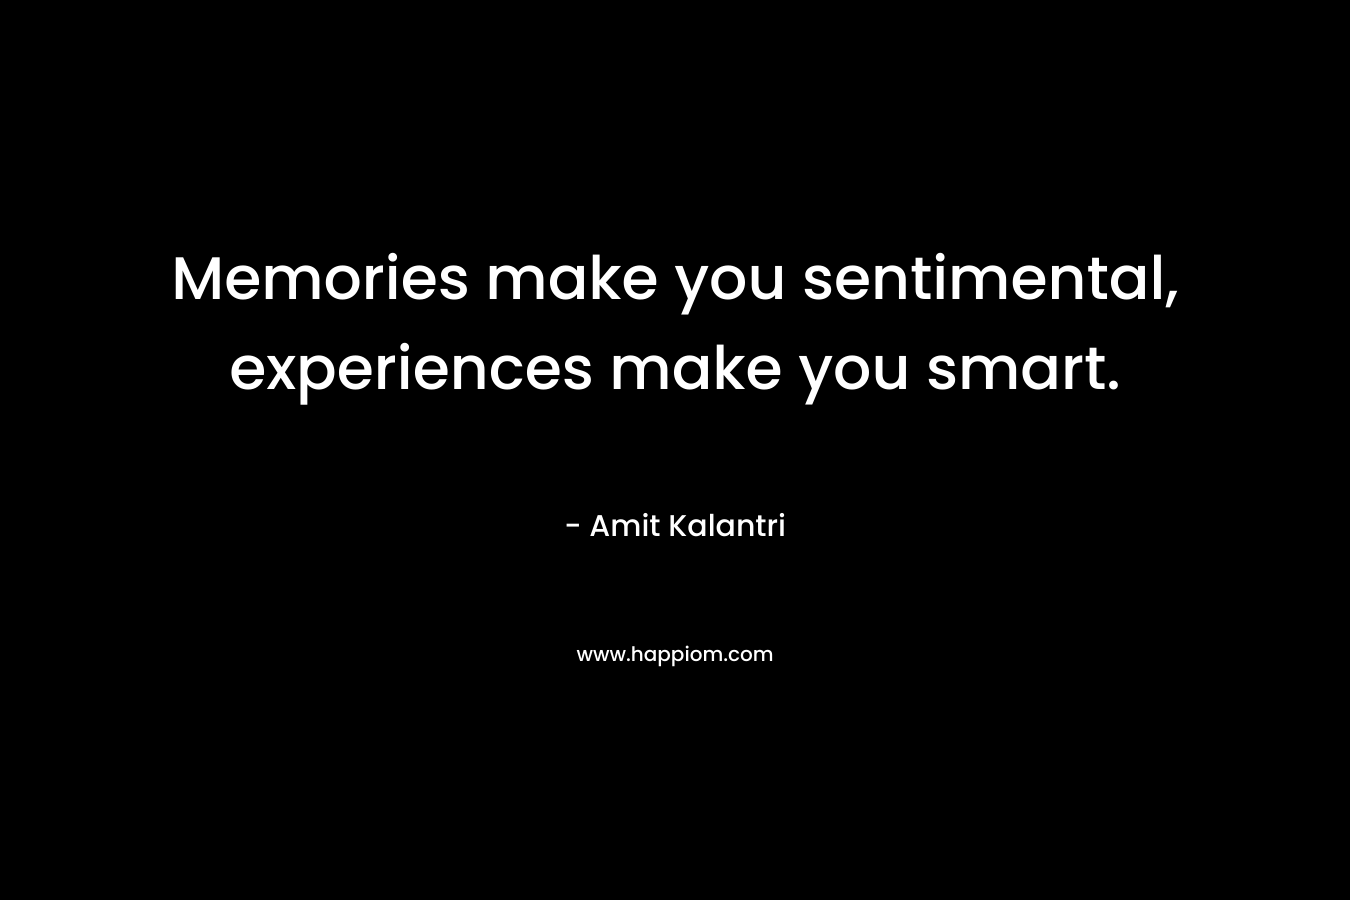 Memories make you sentimental, experiences make you smart.